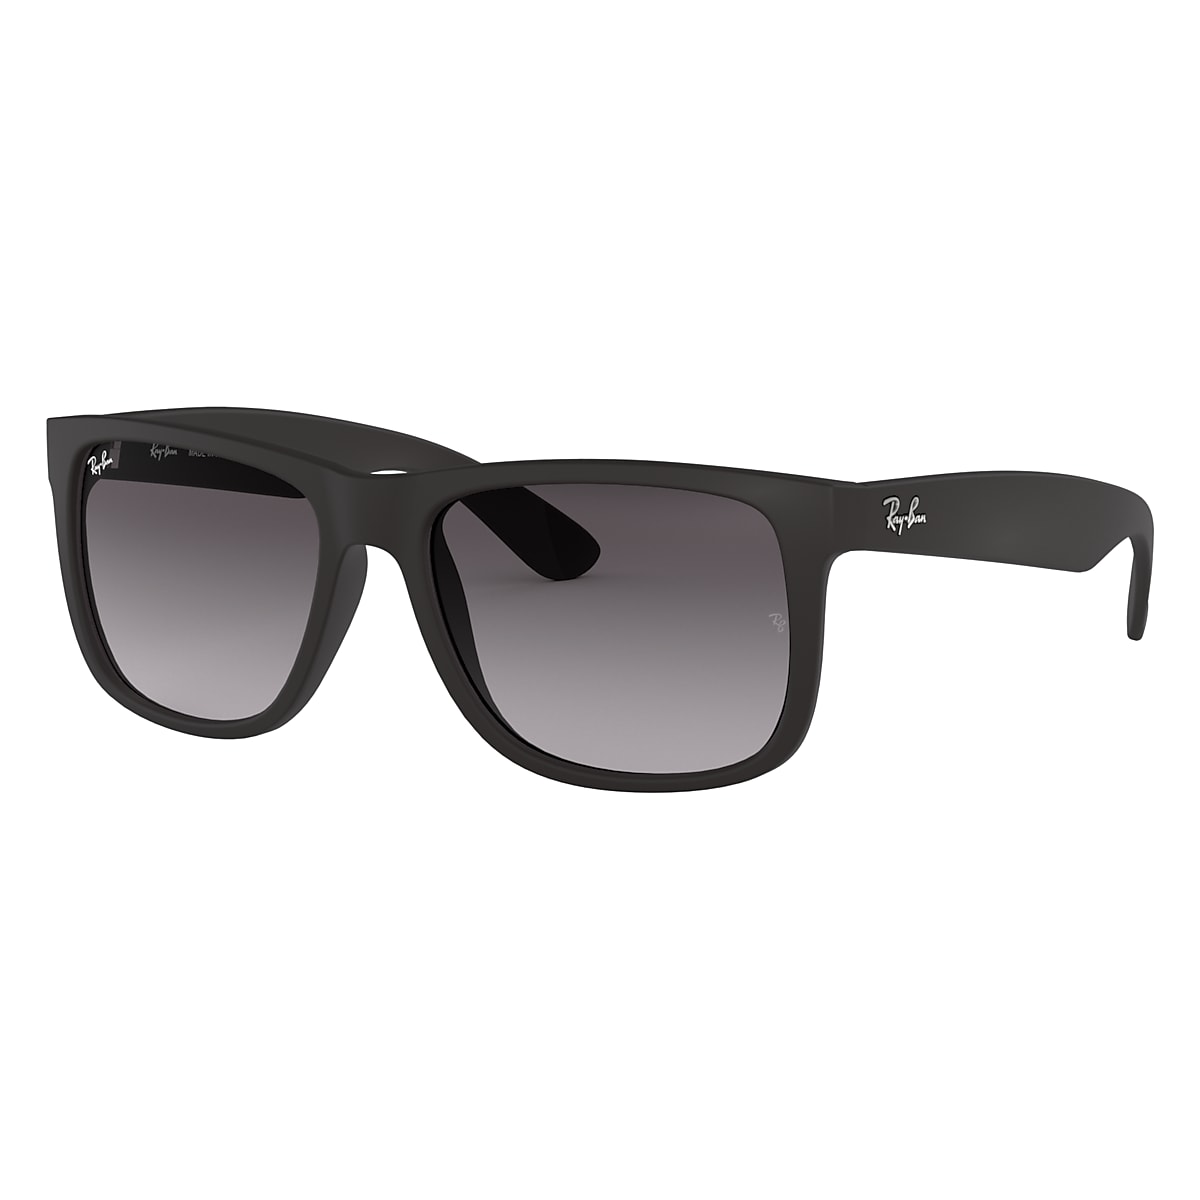 Følelse Masaccio telefon JUSTIN CLASSIC Sunglasses in Black and Dark Grey - RB4165 | Ray-Ban® US